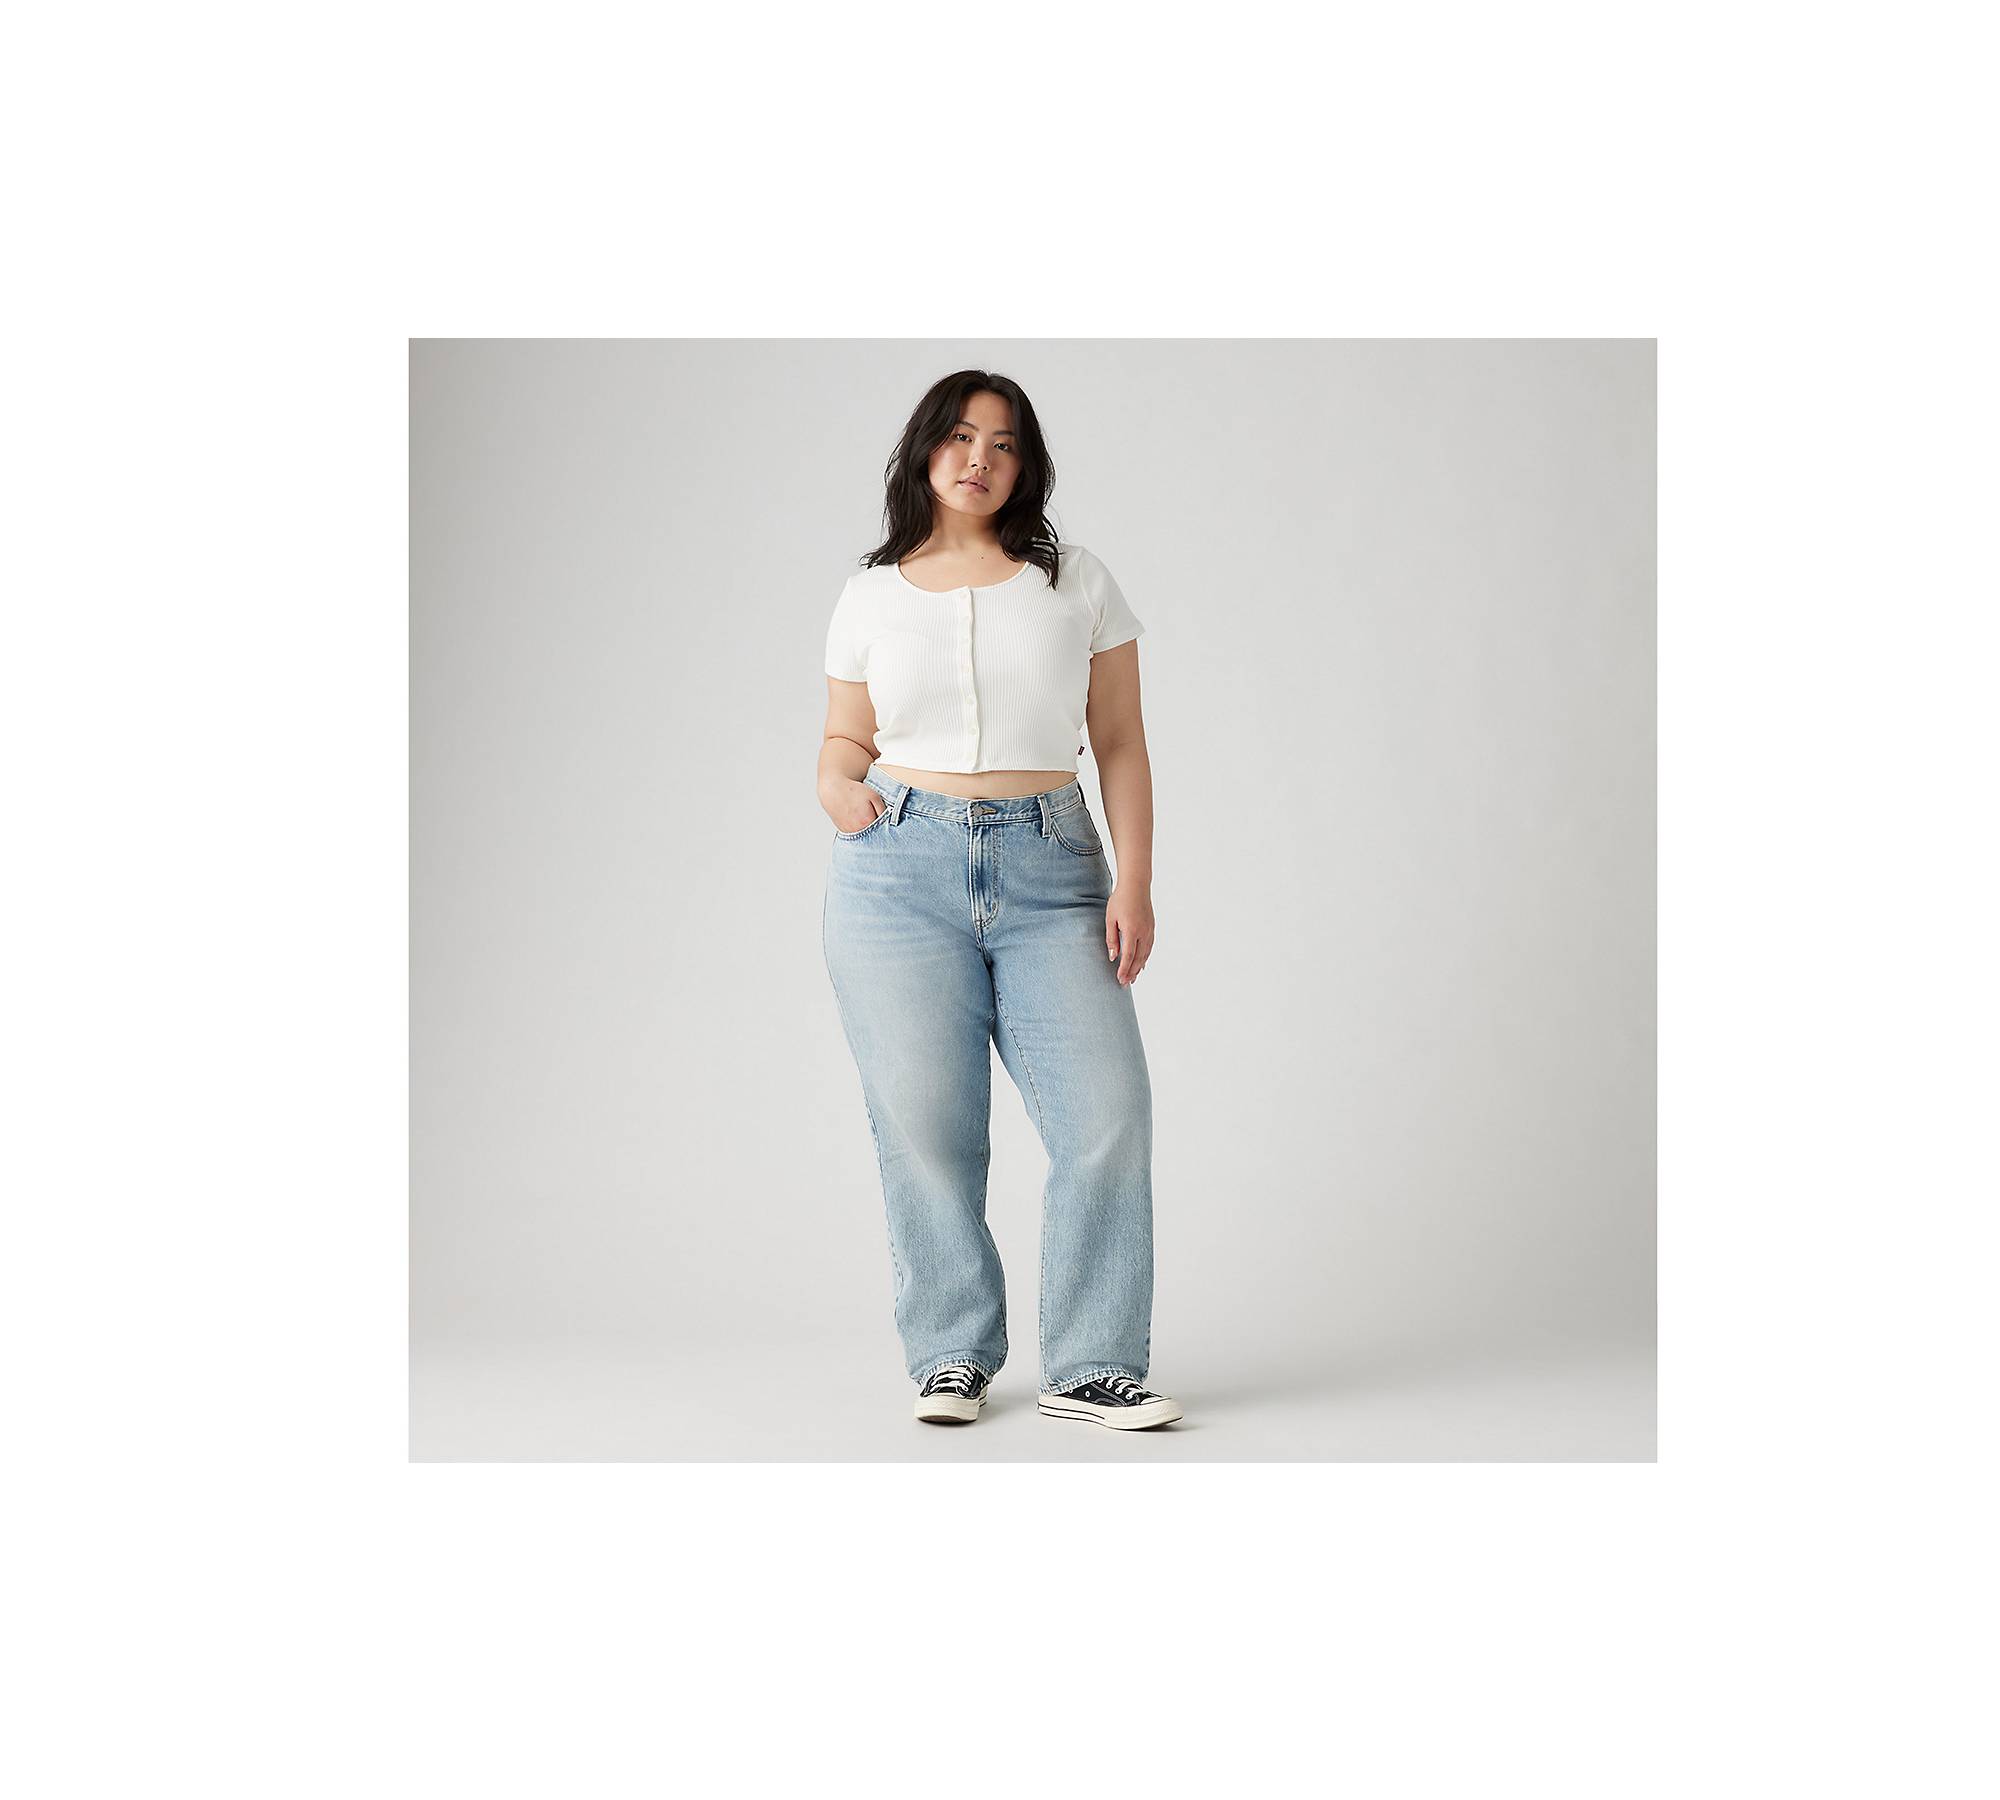 Plus Size Jeans for Curvy Women Online - Baggy Jeans